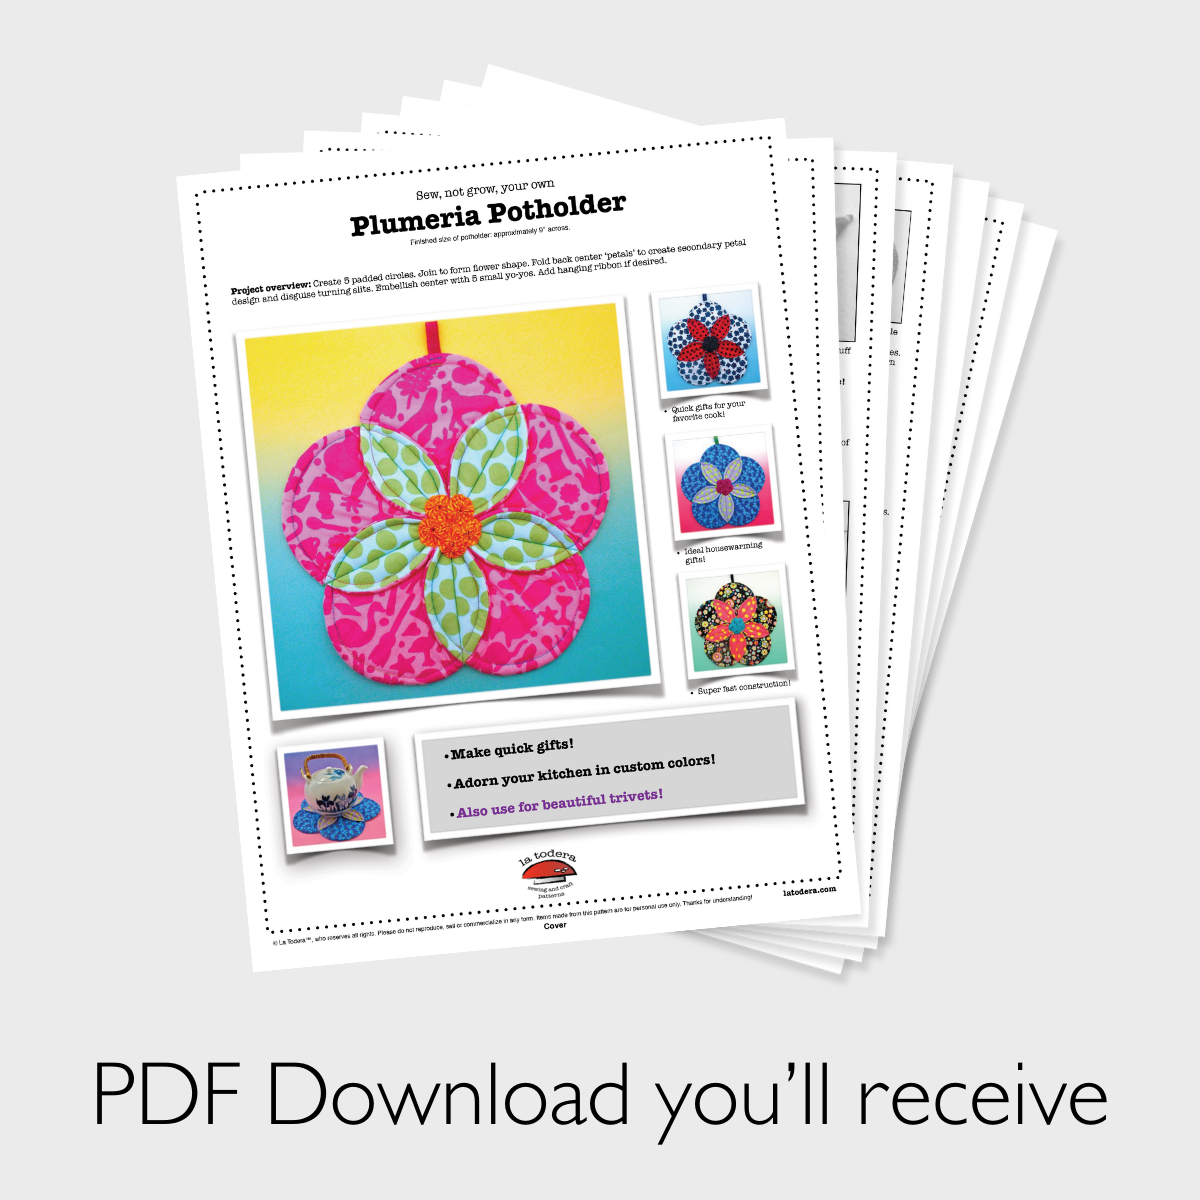 DIY Plumeria Flower Quilted Potholder Tutorial - PDF Sewing Pattern